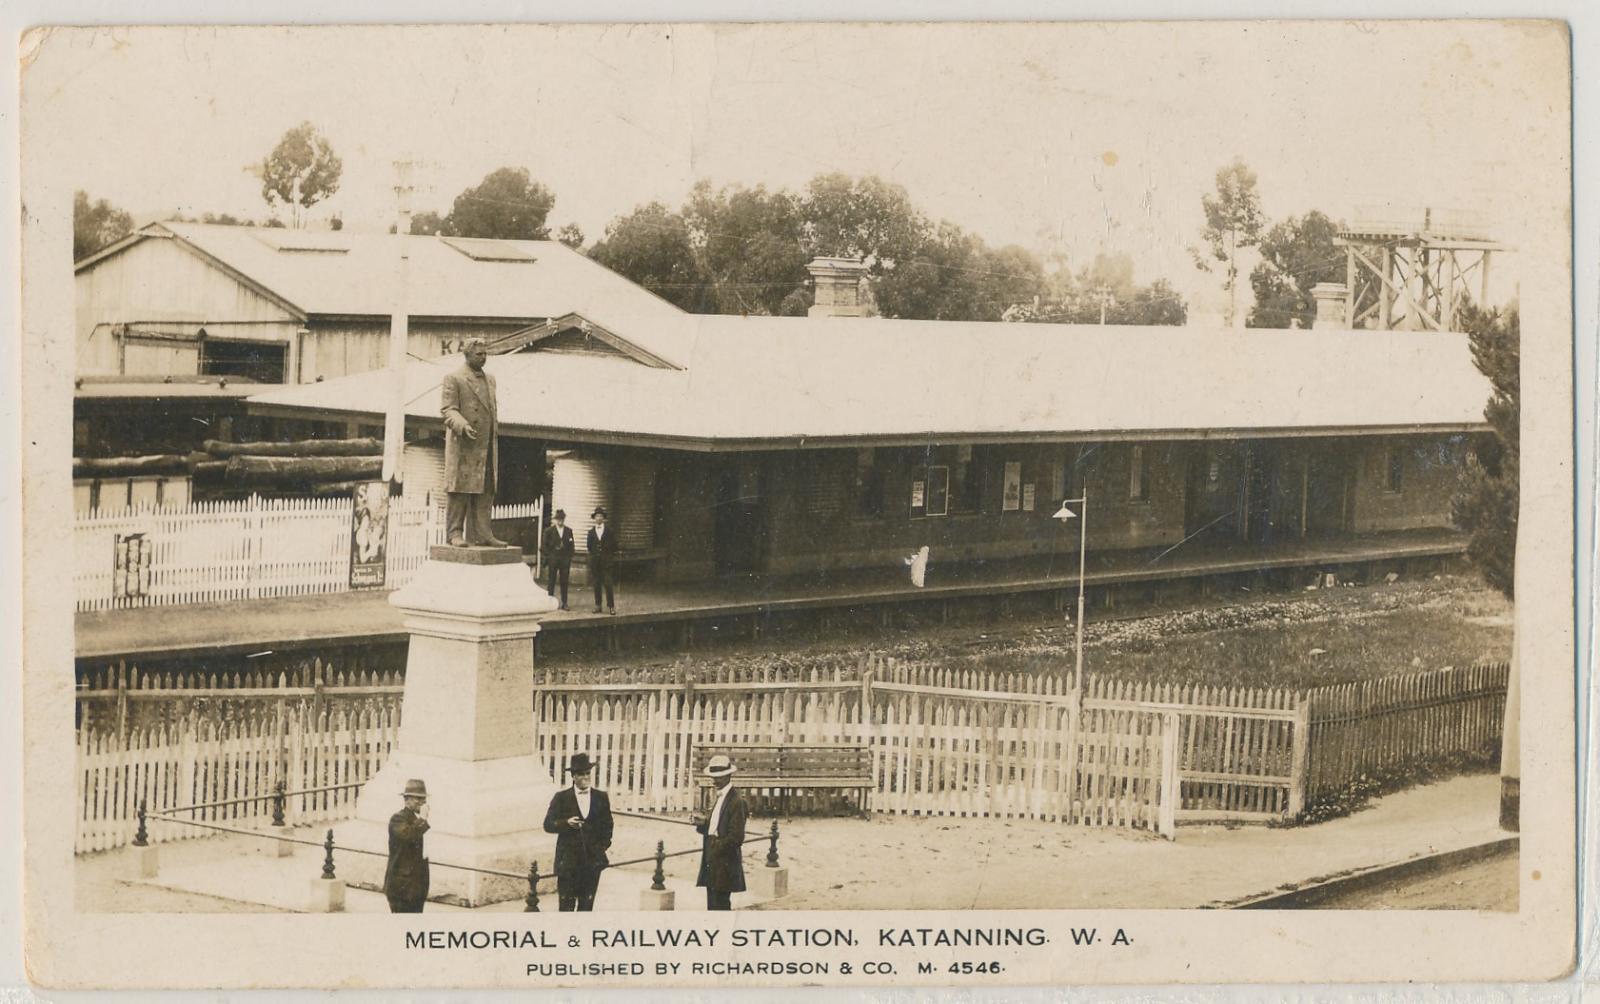 Memorial & Railway Station, Katanning